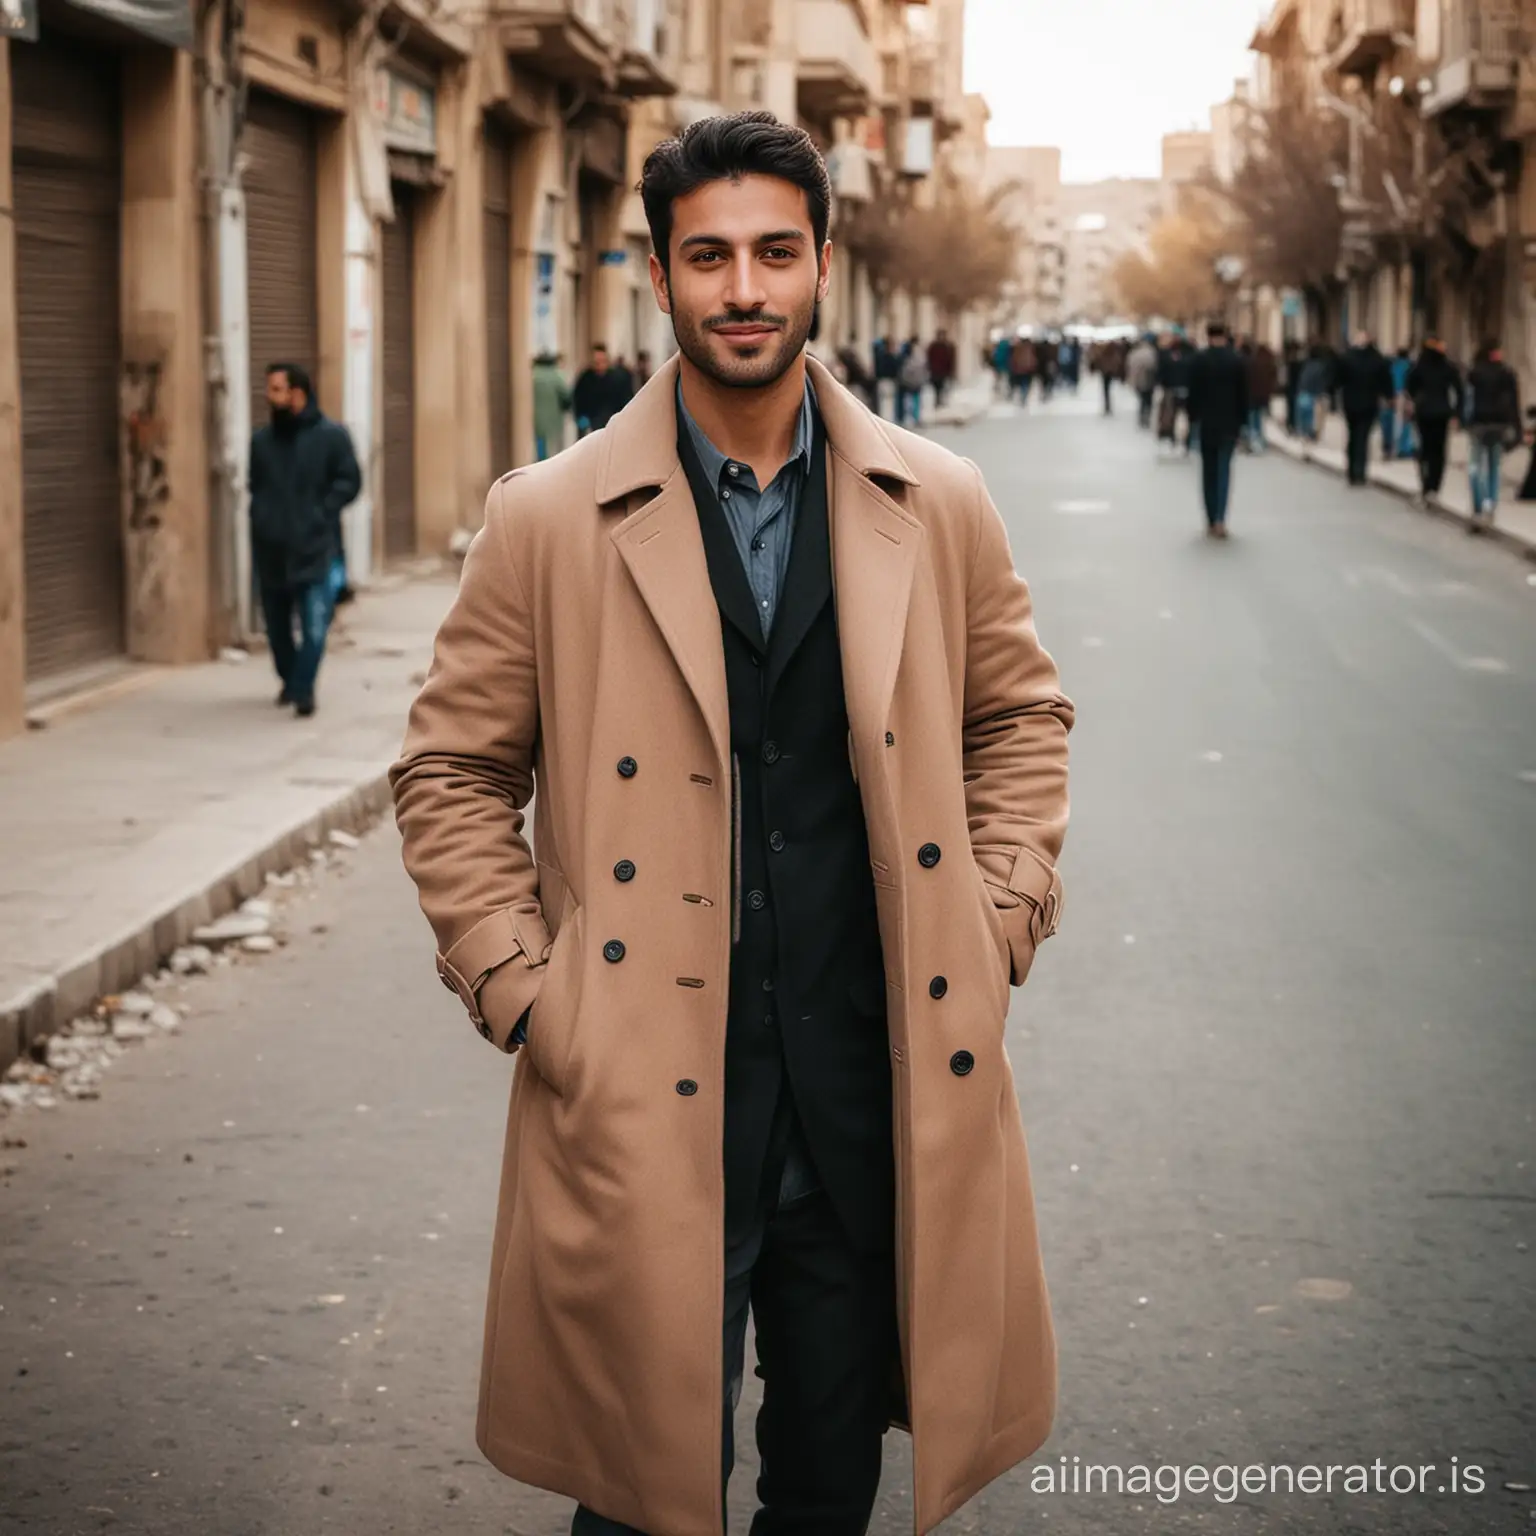 Stylish-Iranian-Man-in-Traditional-Coat-on-Bustling-Street